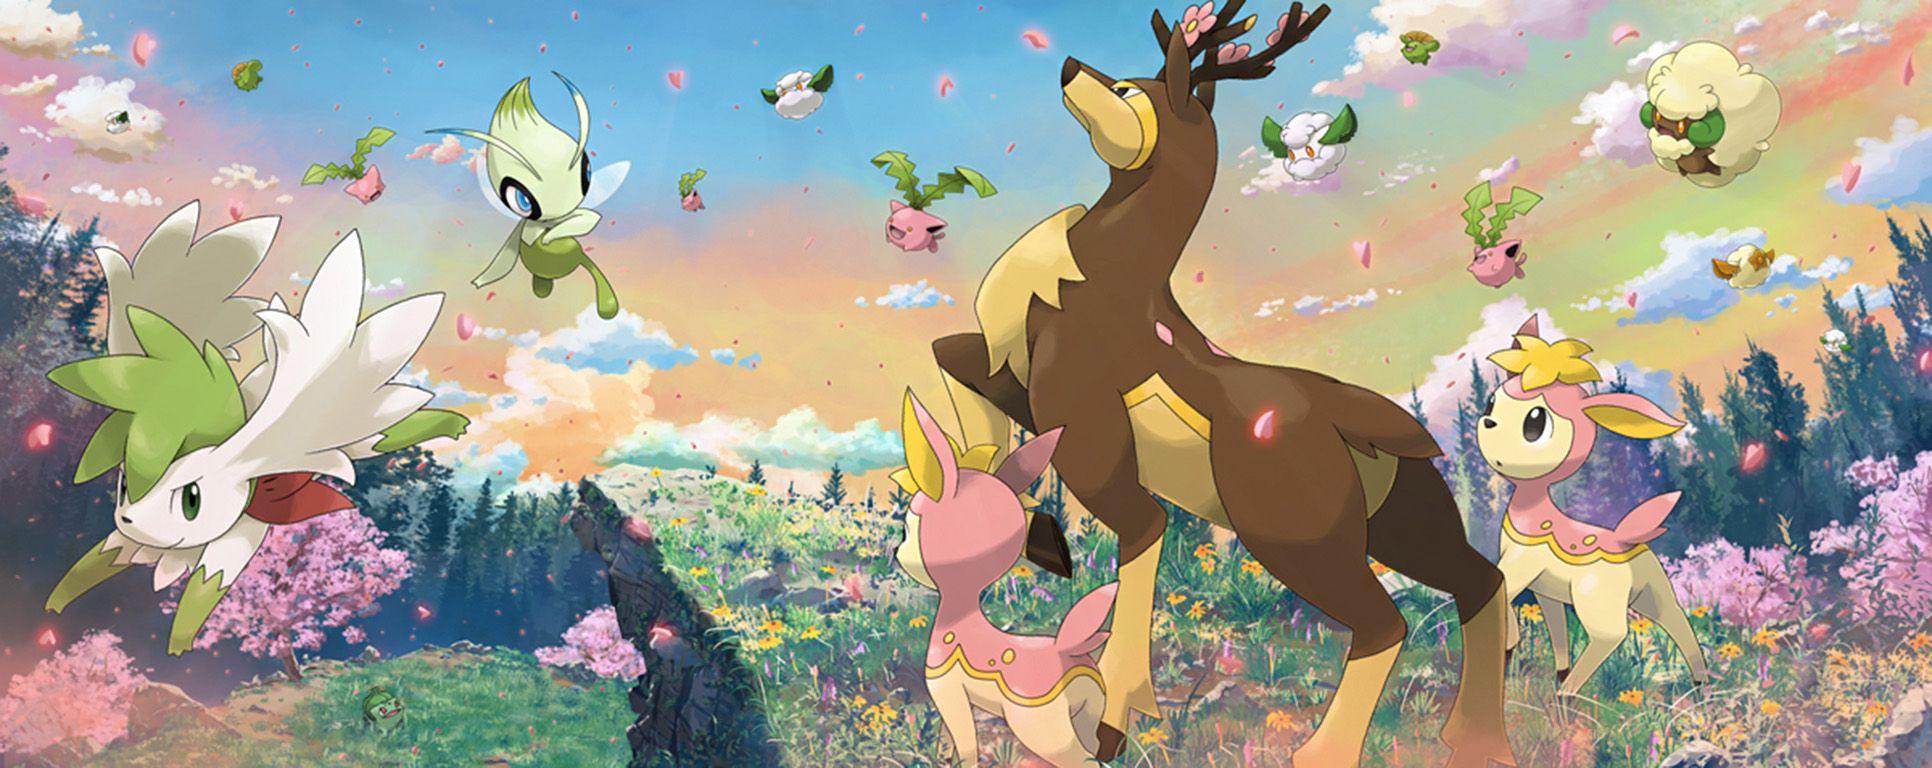 Shaymin (Pokémon) HD Wallpaper and Background Image